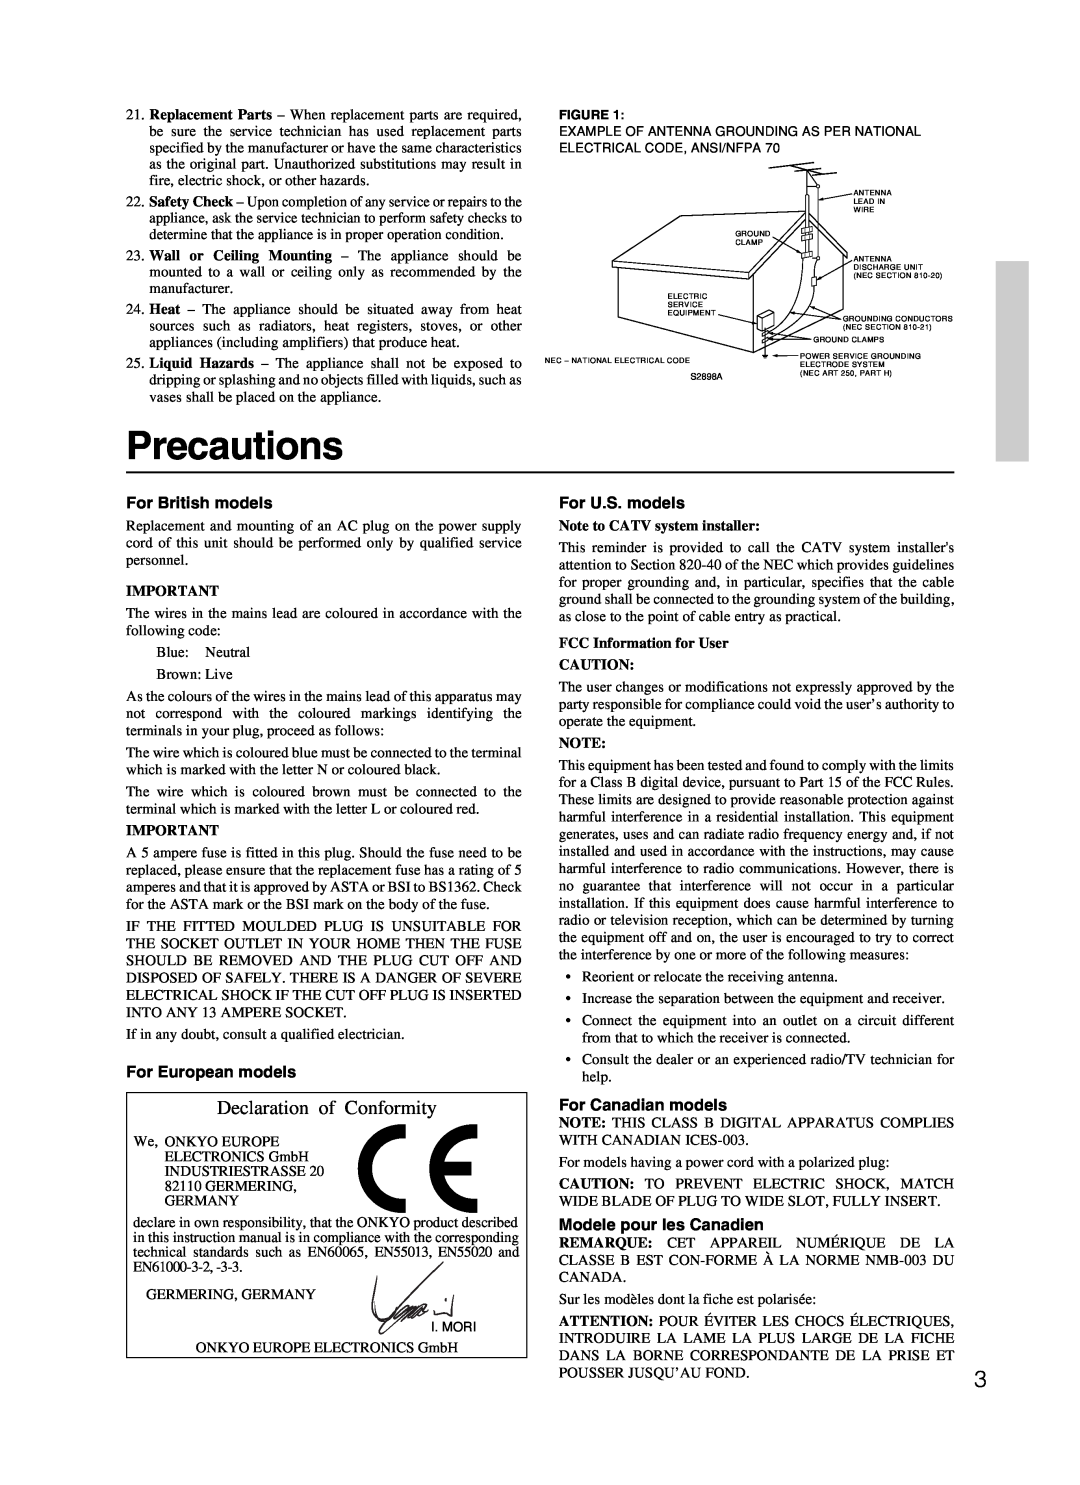 Onkyo TX-SR500 appendix Precautions, Declaration of Conformity, Note to CATV system installer, FCC Information for User 